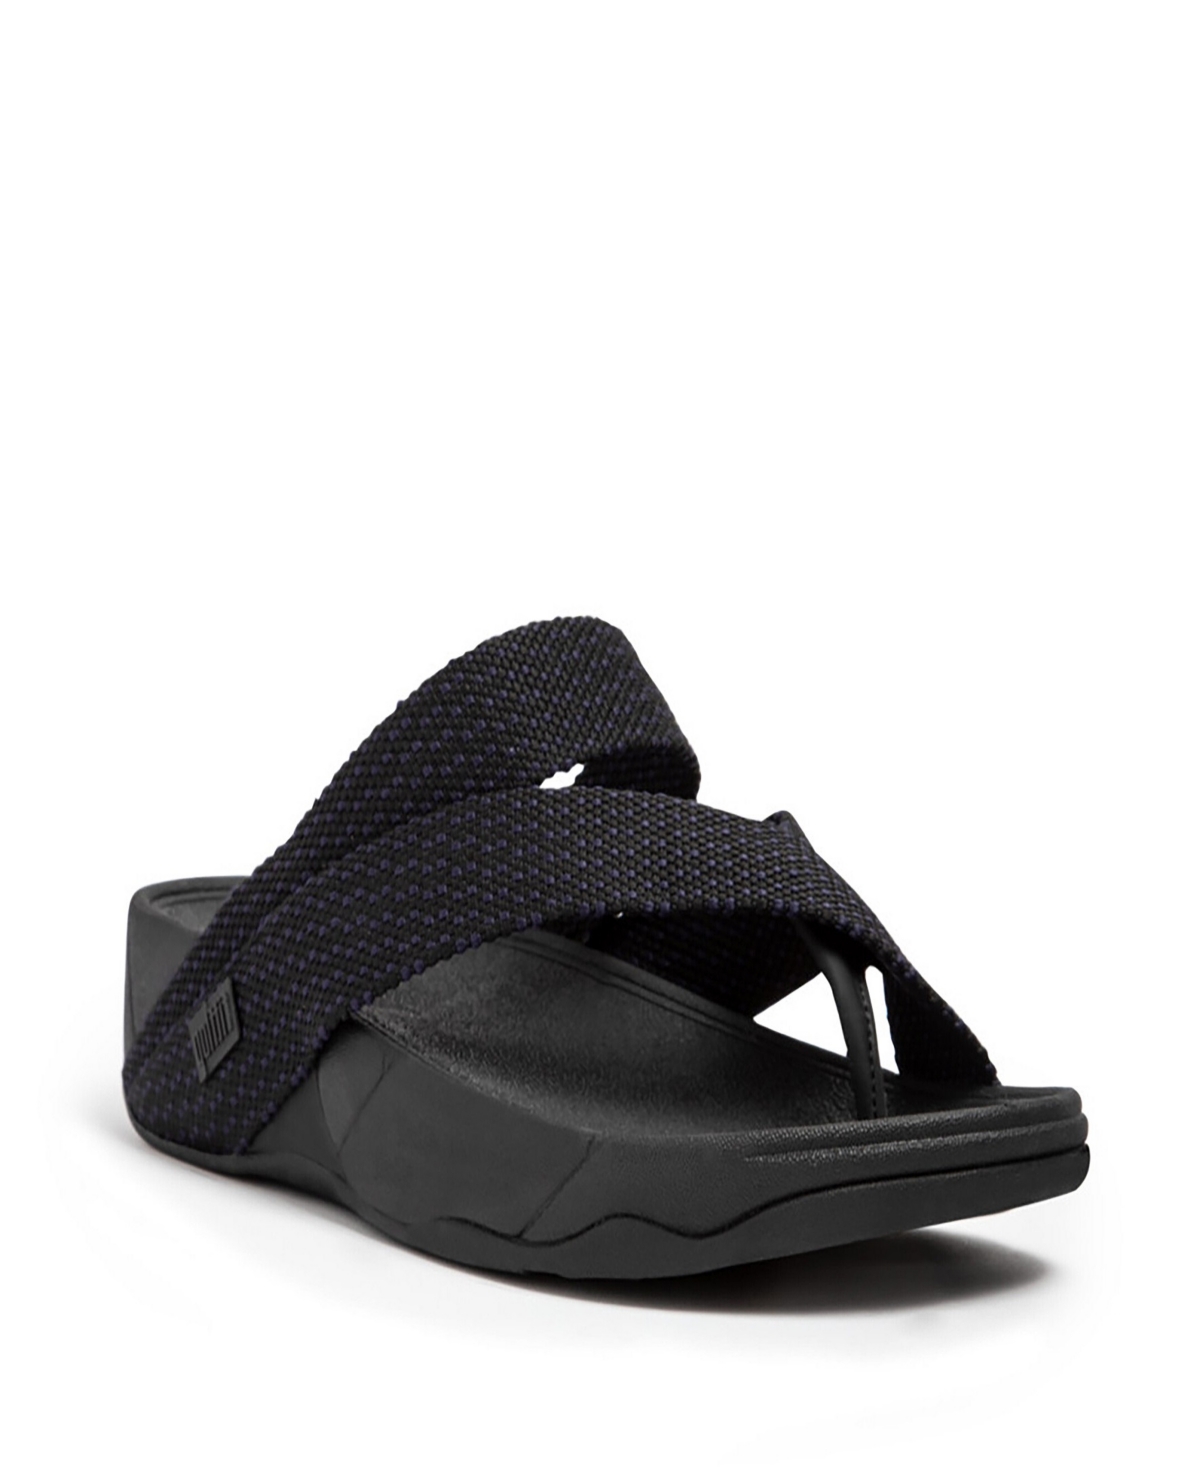 Men's Sling Weave Toe Post Sandals - Black/sea